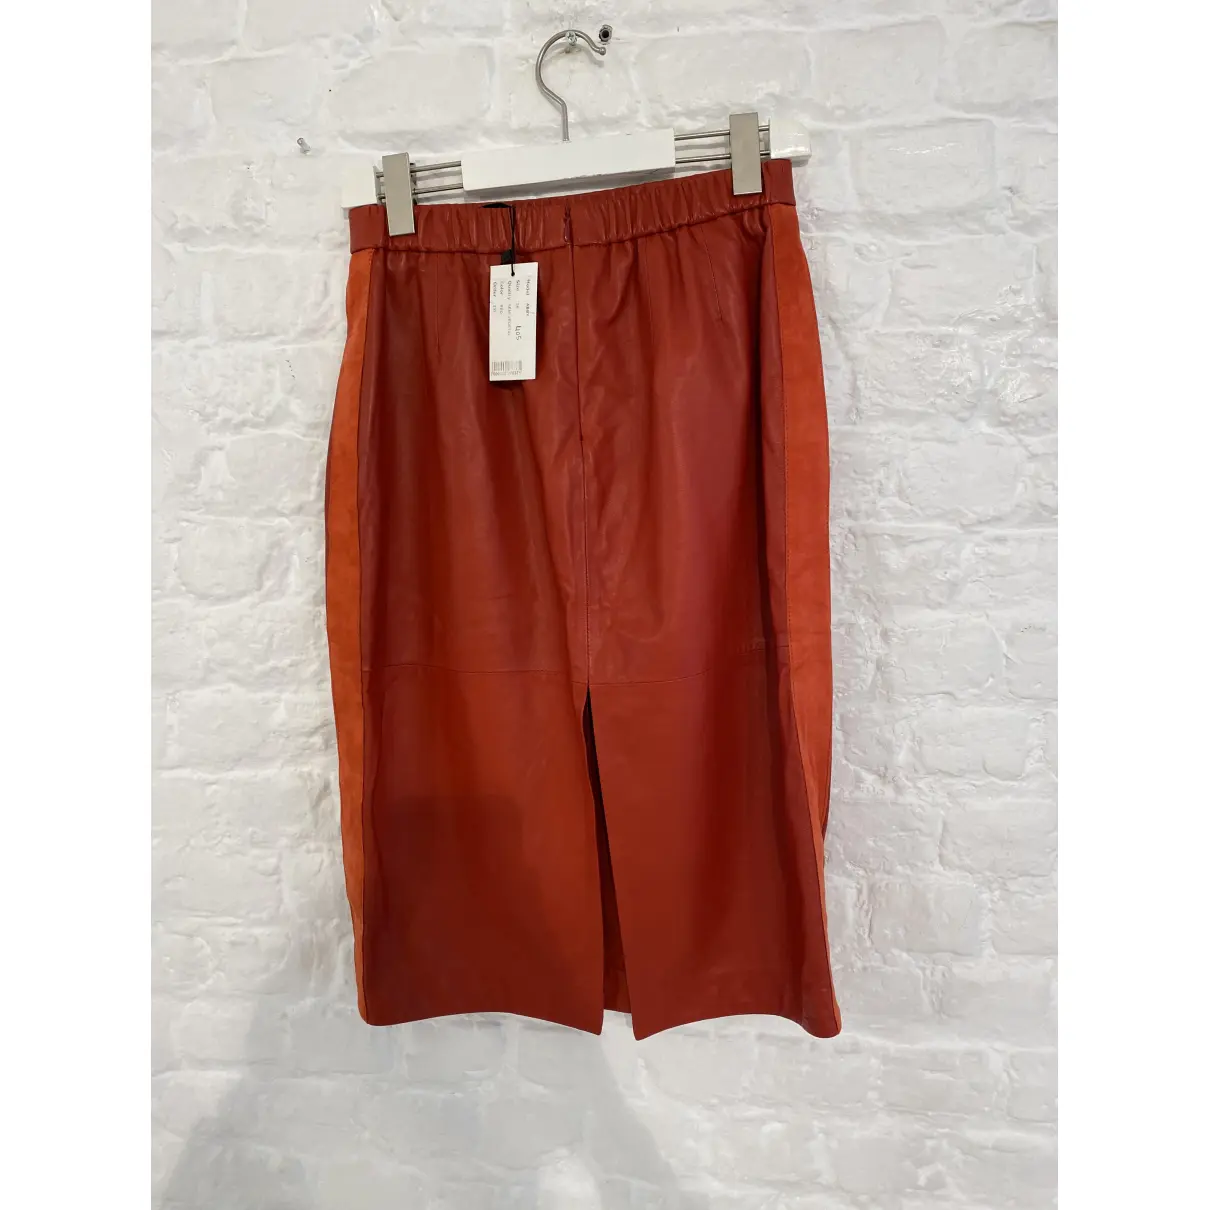 Buy Enes Leather mid-length skirt online